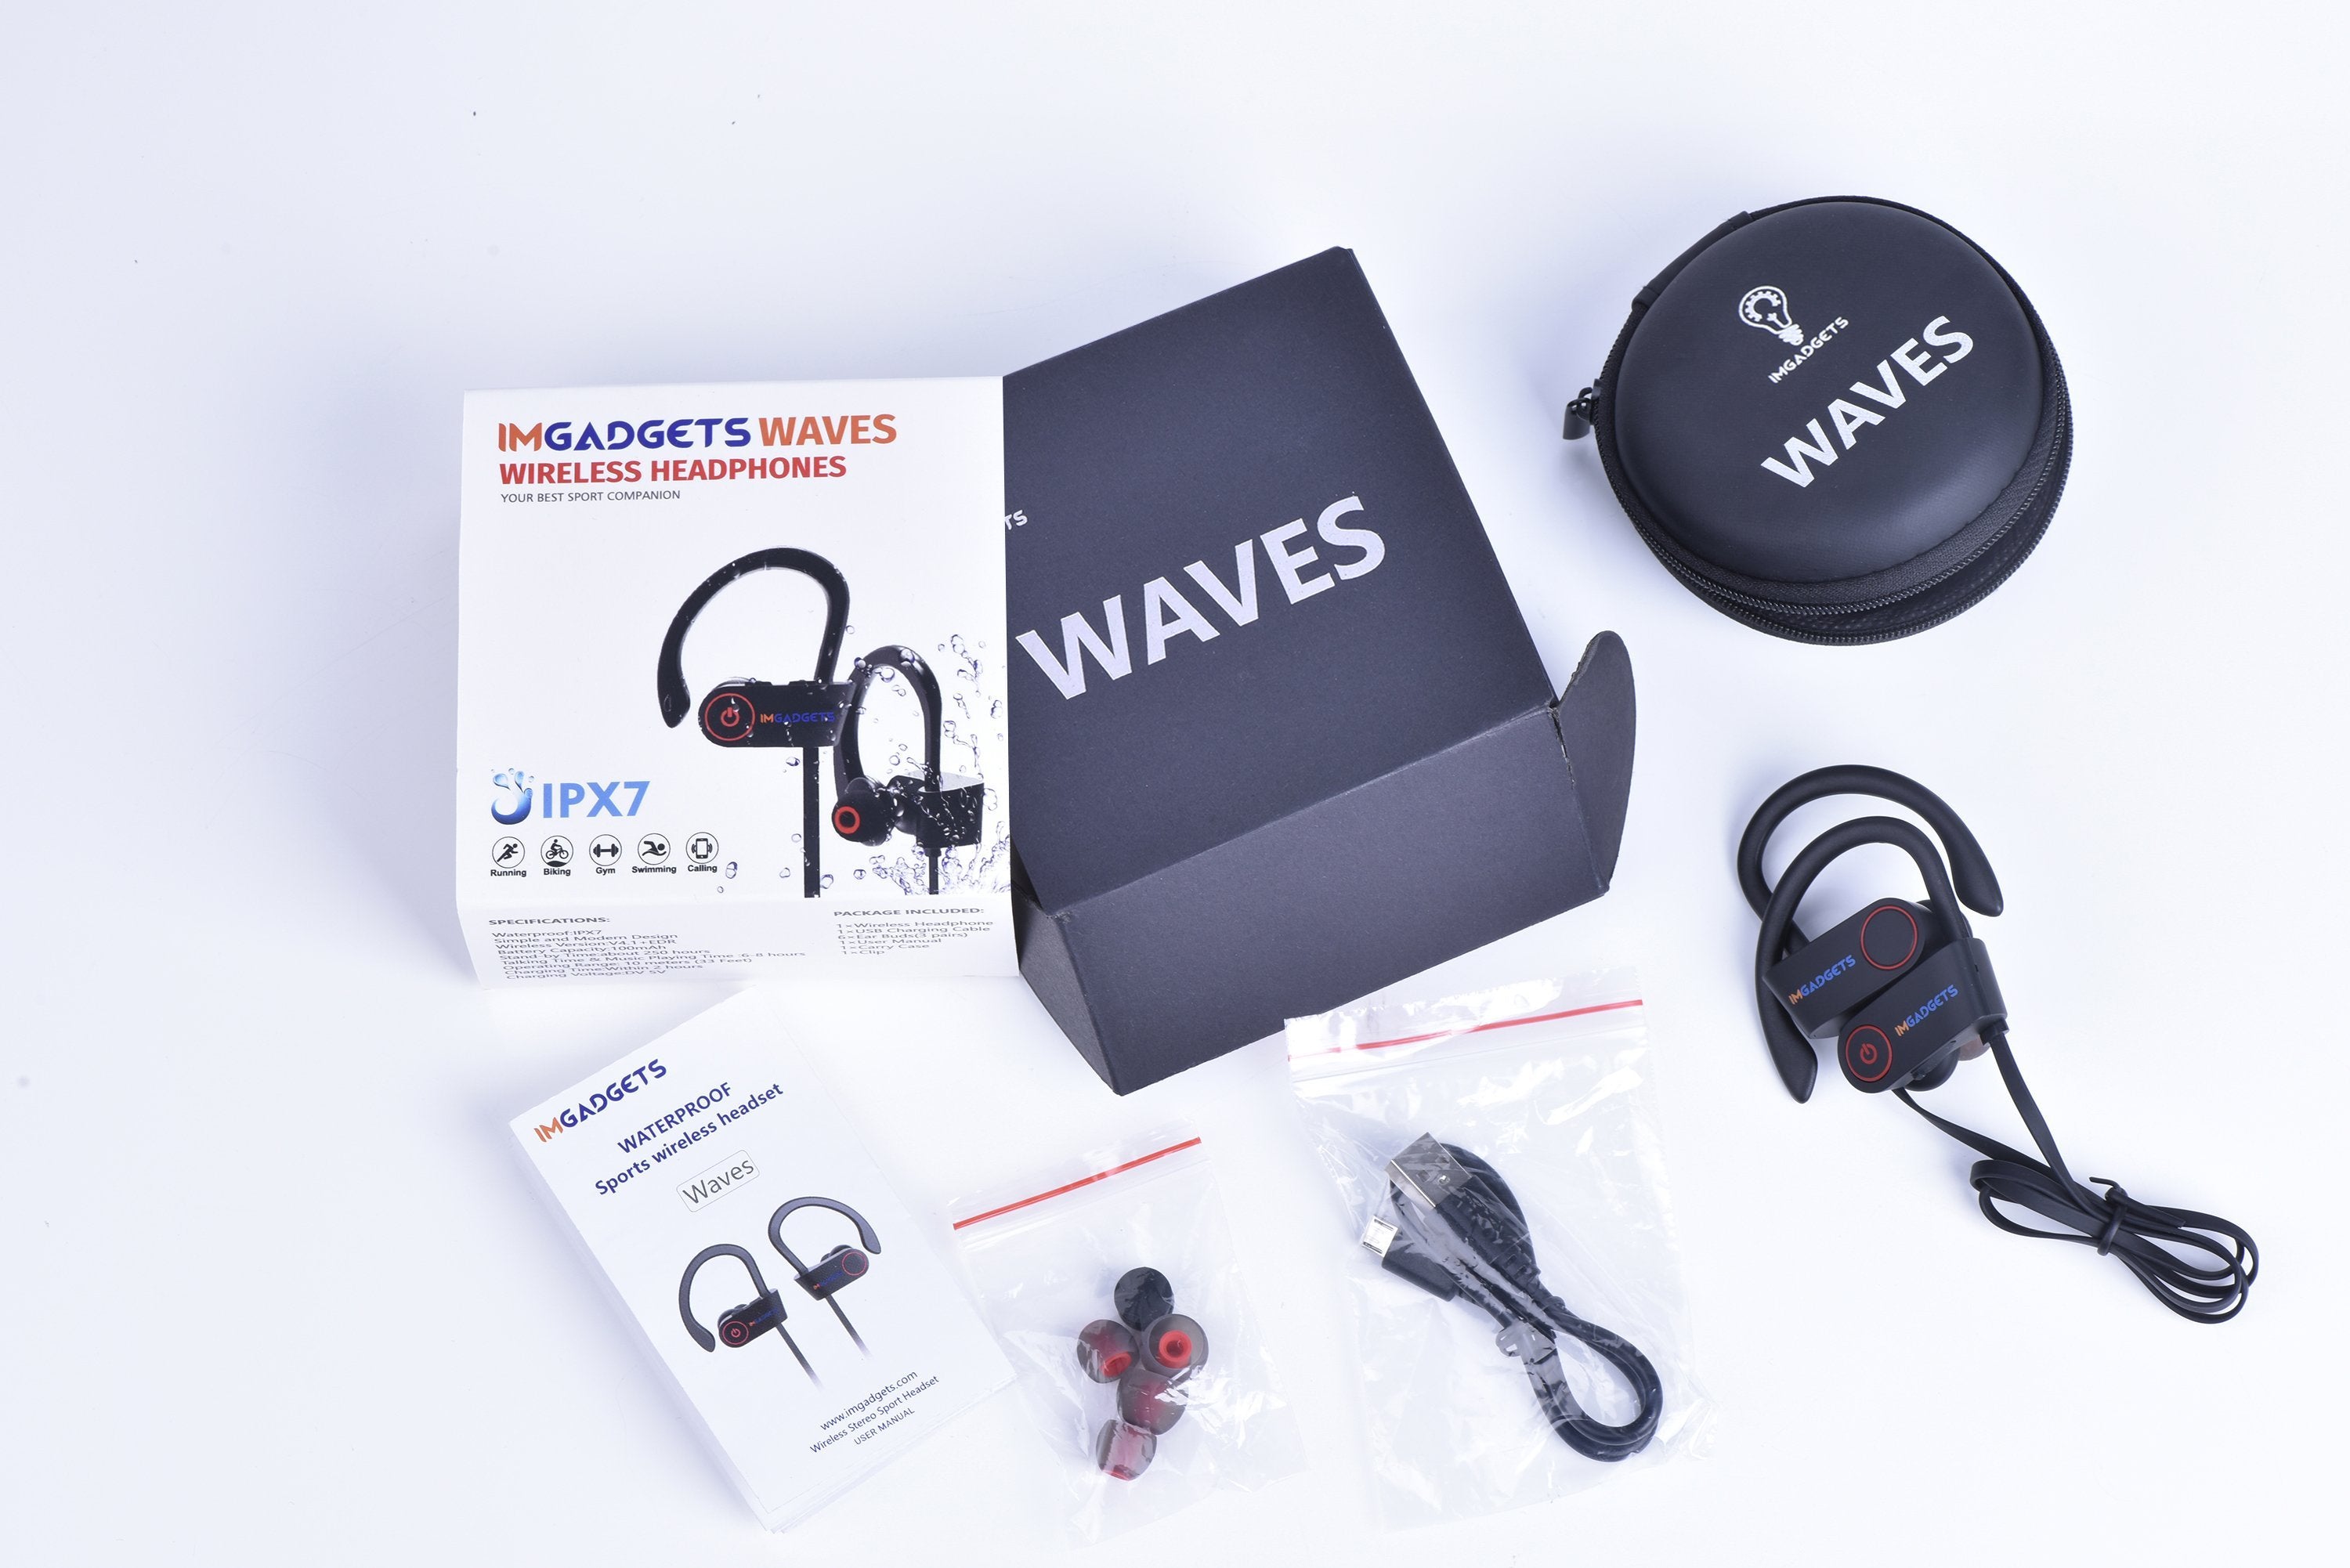 IMGadgets Wireless , Waterproof In-Ear Headphones and Case